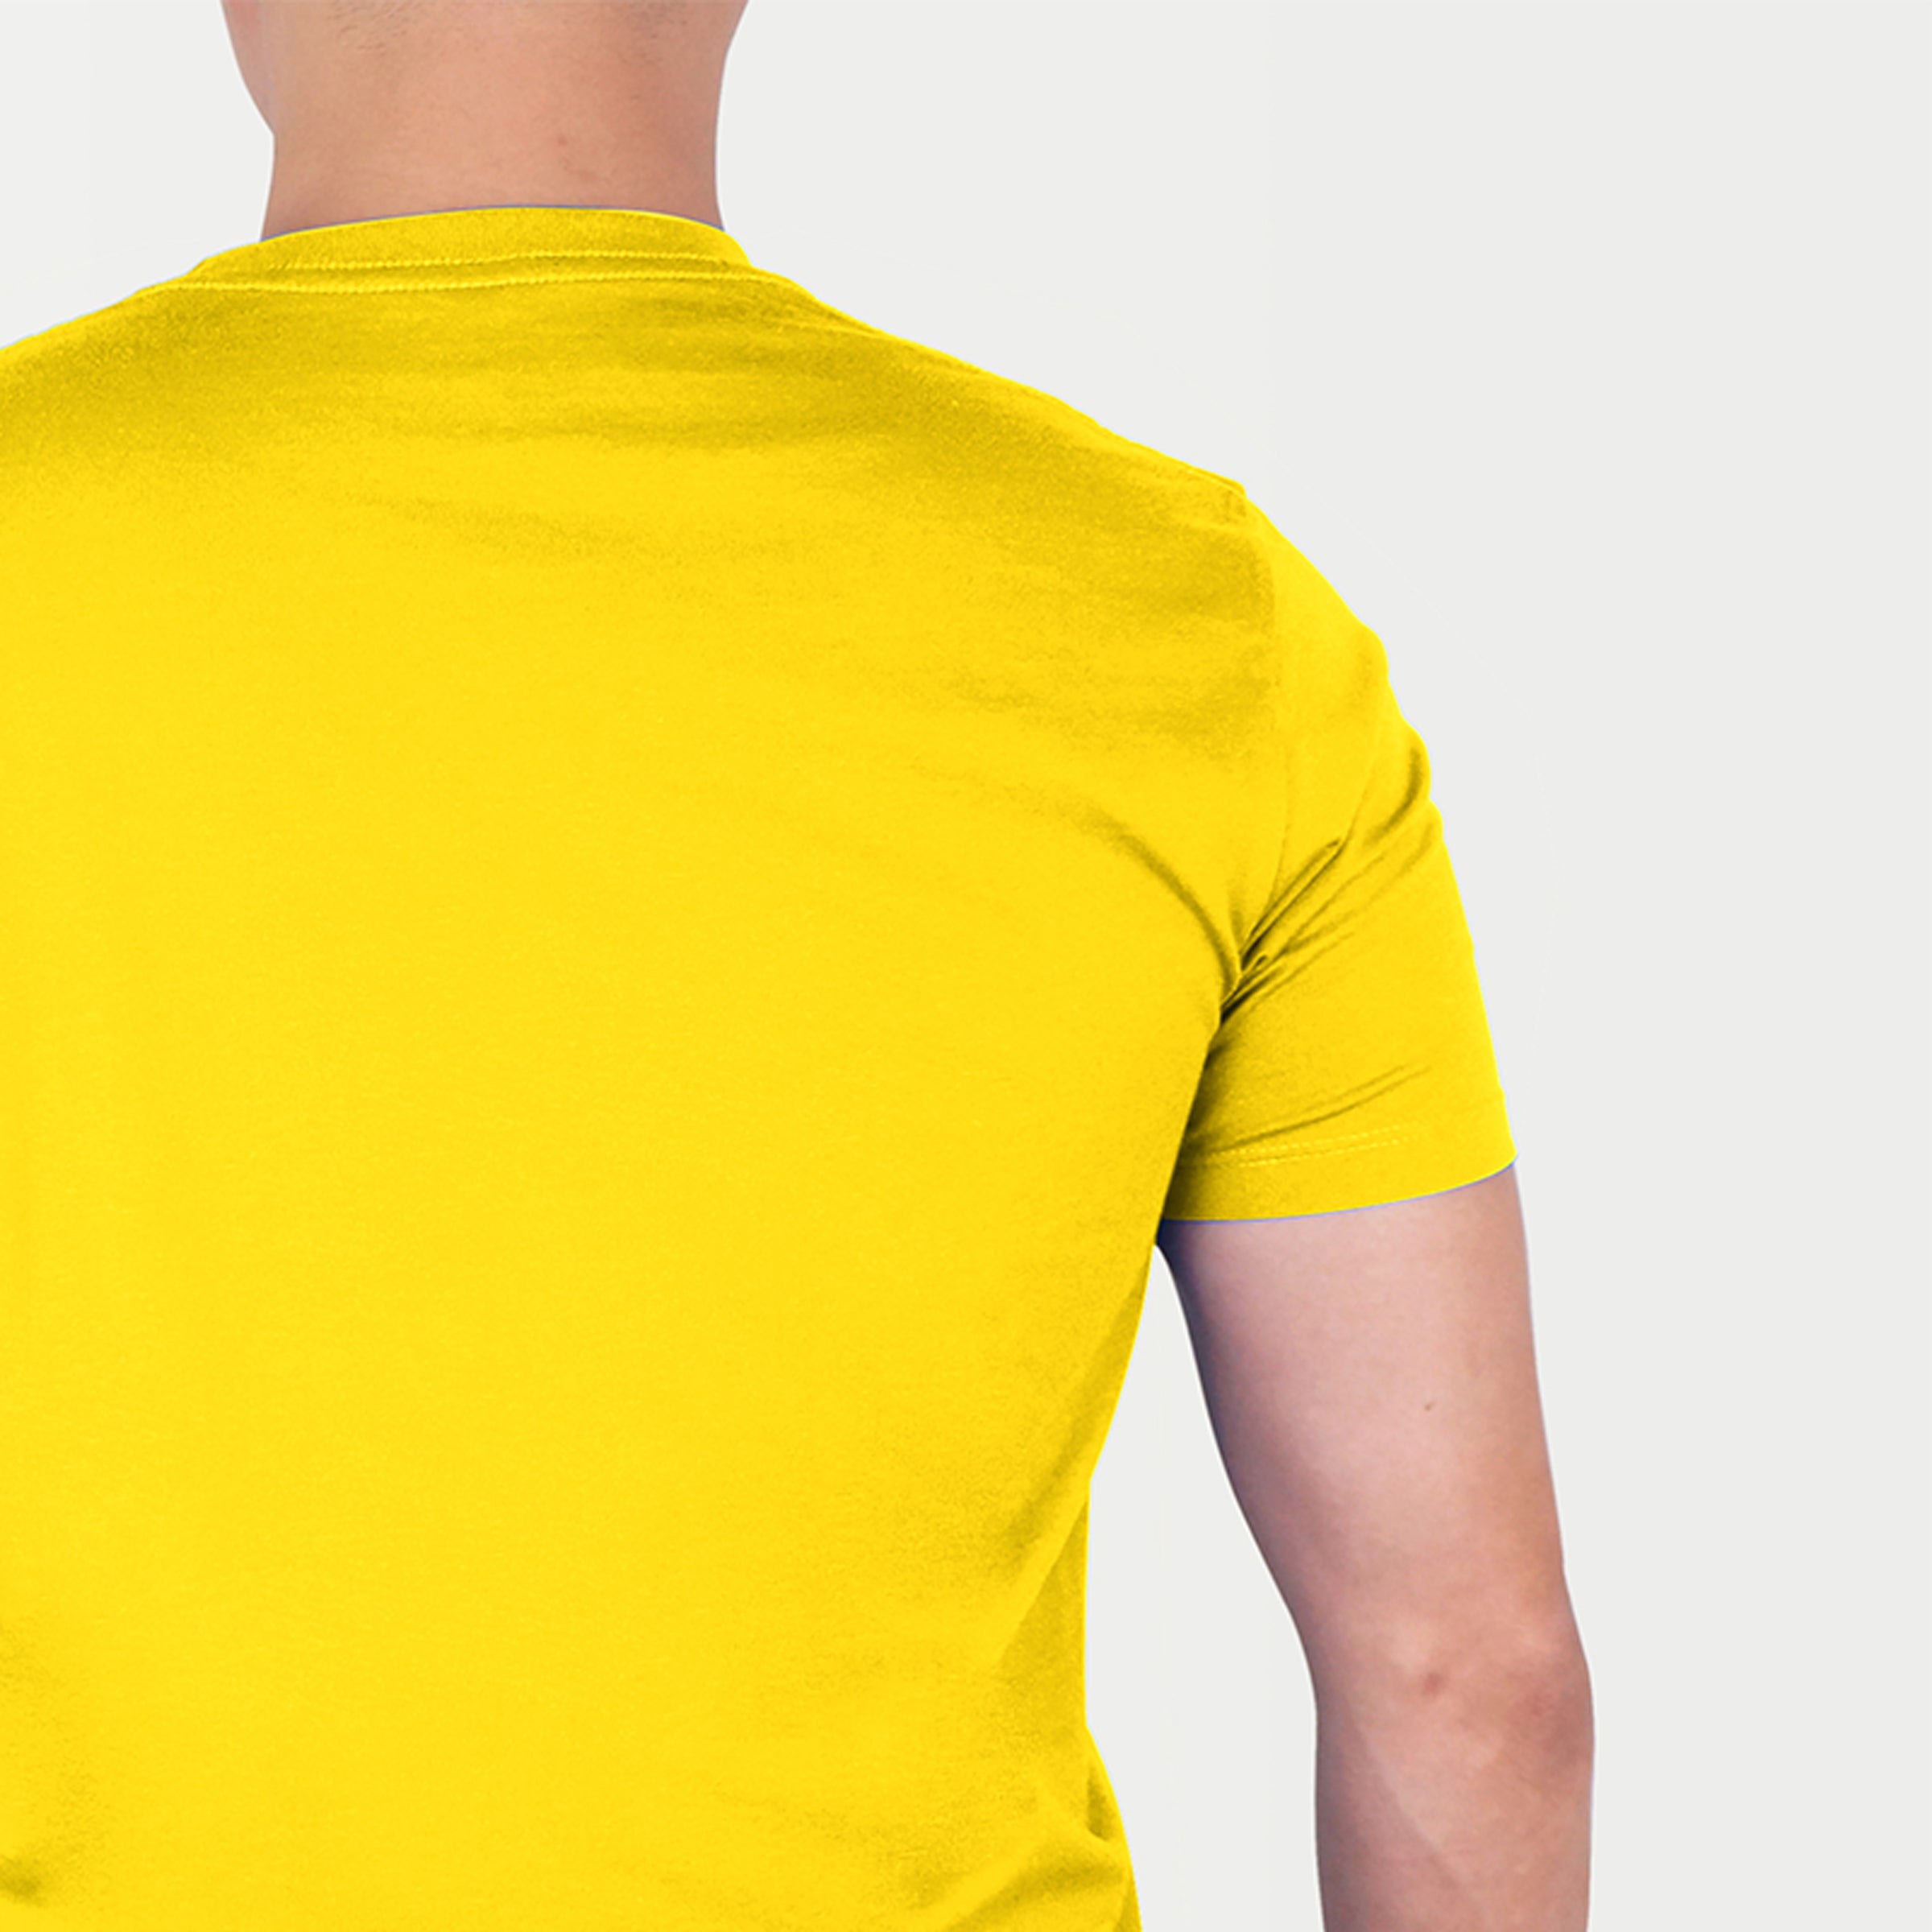 indigo yellow t-shirt plain left side angle